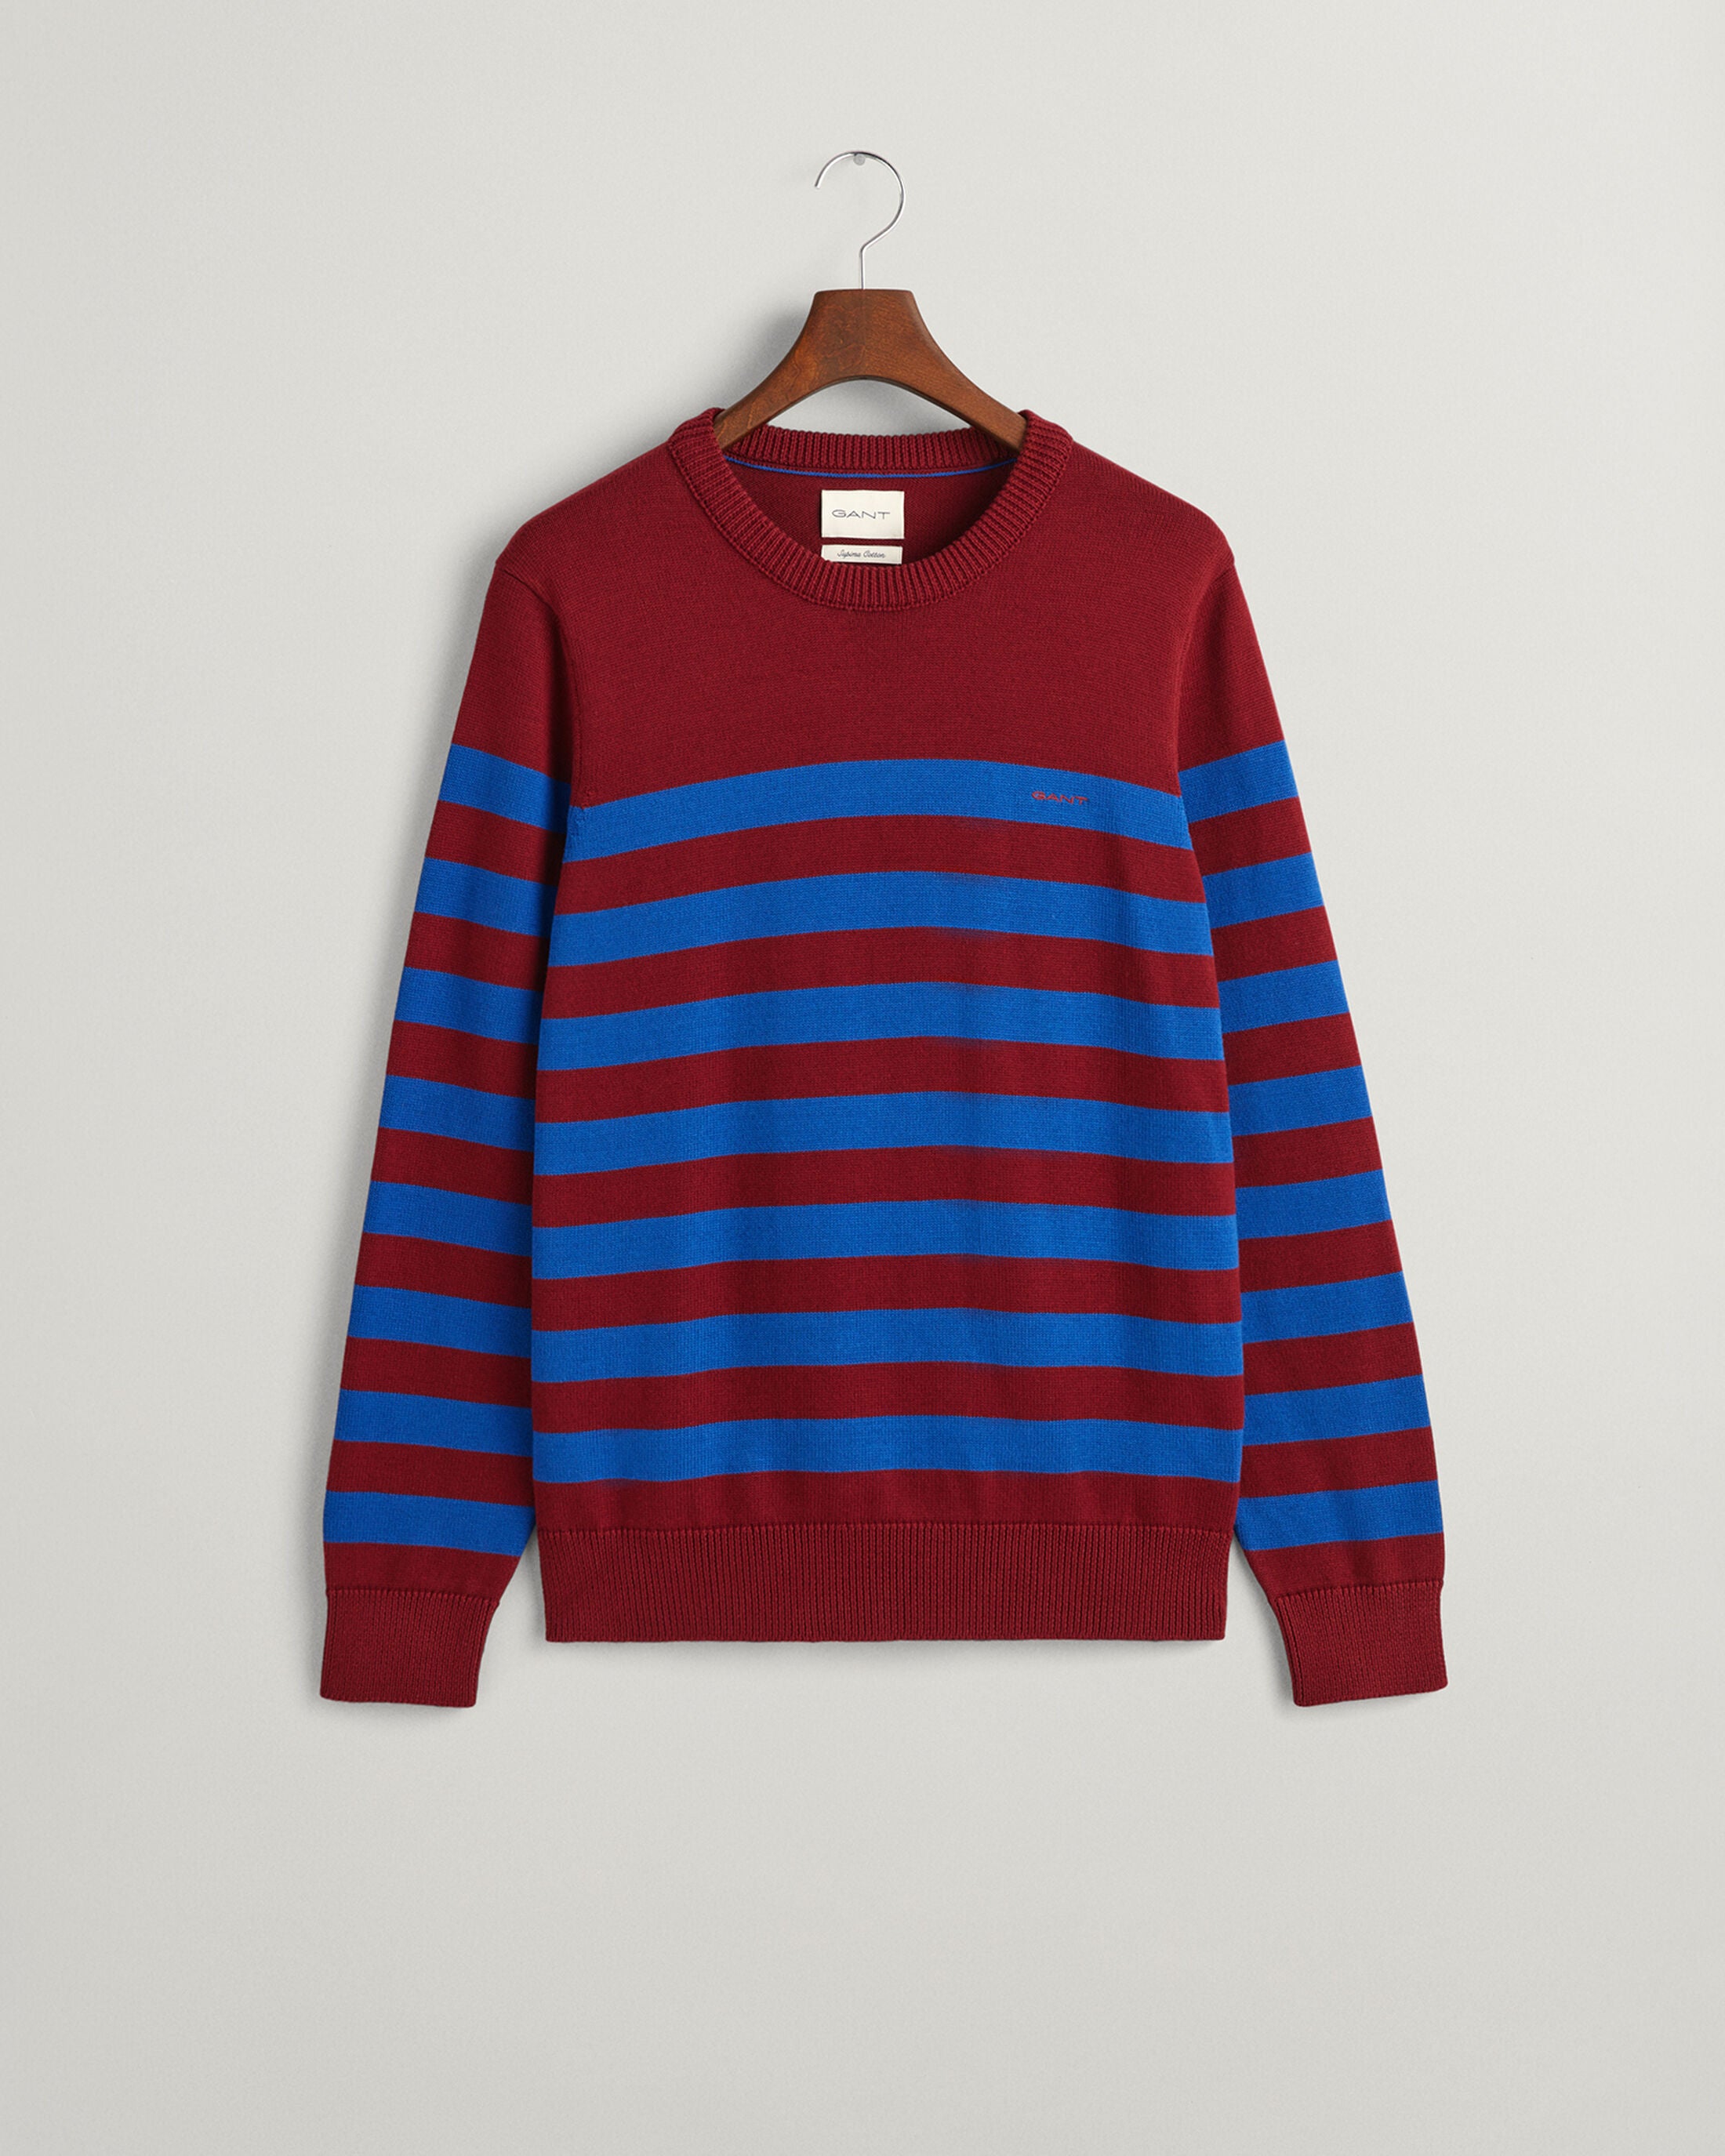 Gant + Breton Striped Crew Neck Sweater